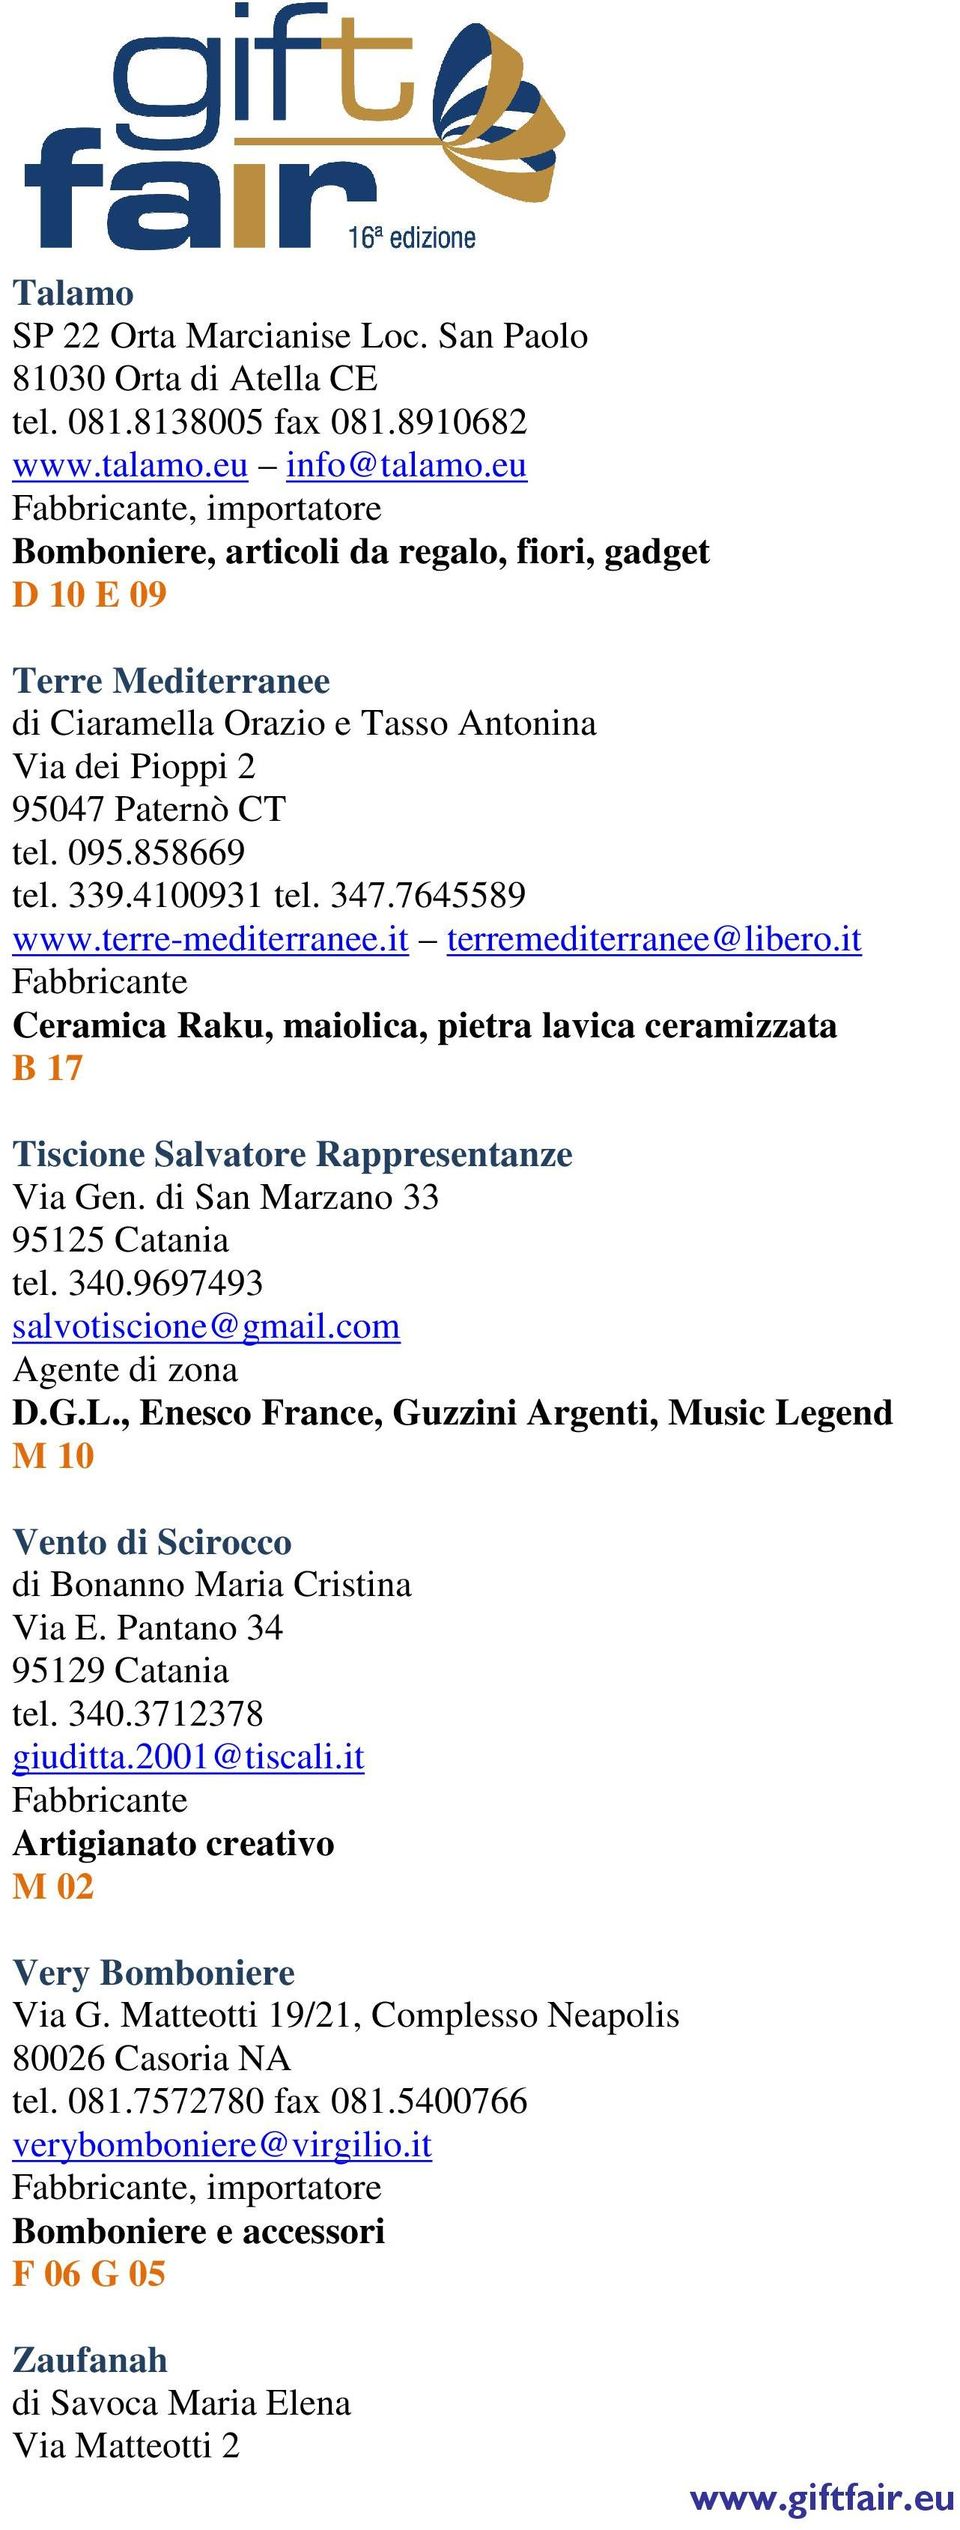 347.7645589 www.terre-mediterranee.it terremediterranee@libero.it Ceramica Raku, maiolica, pietra lavica ceramizzata B 17 Tiscione Salvatore Rappresentanze Via Gen.